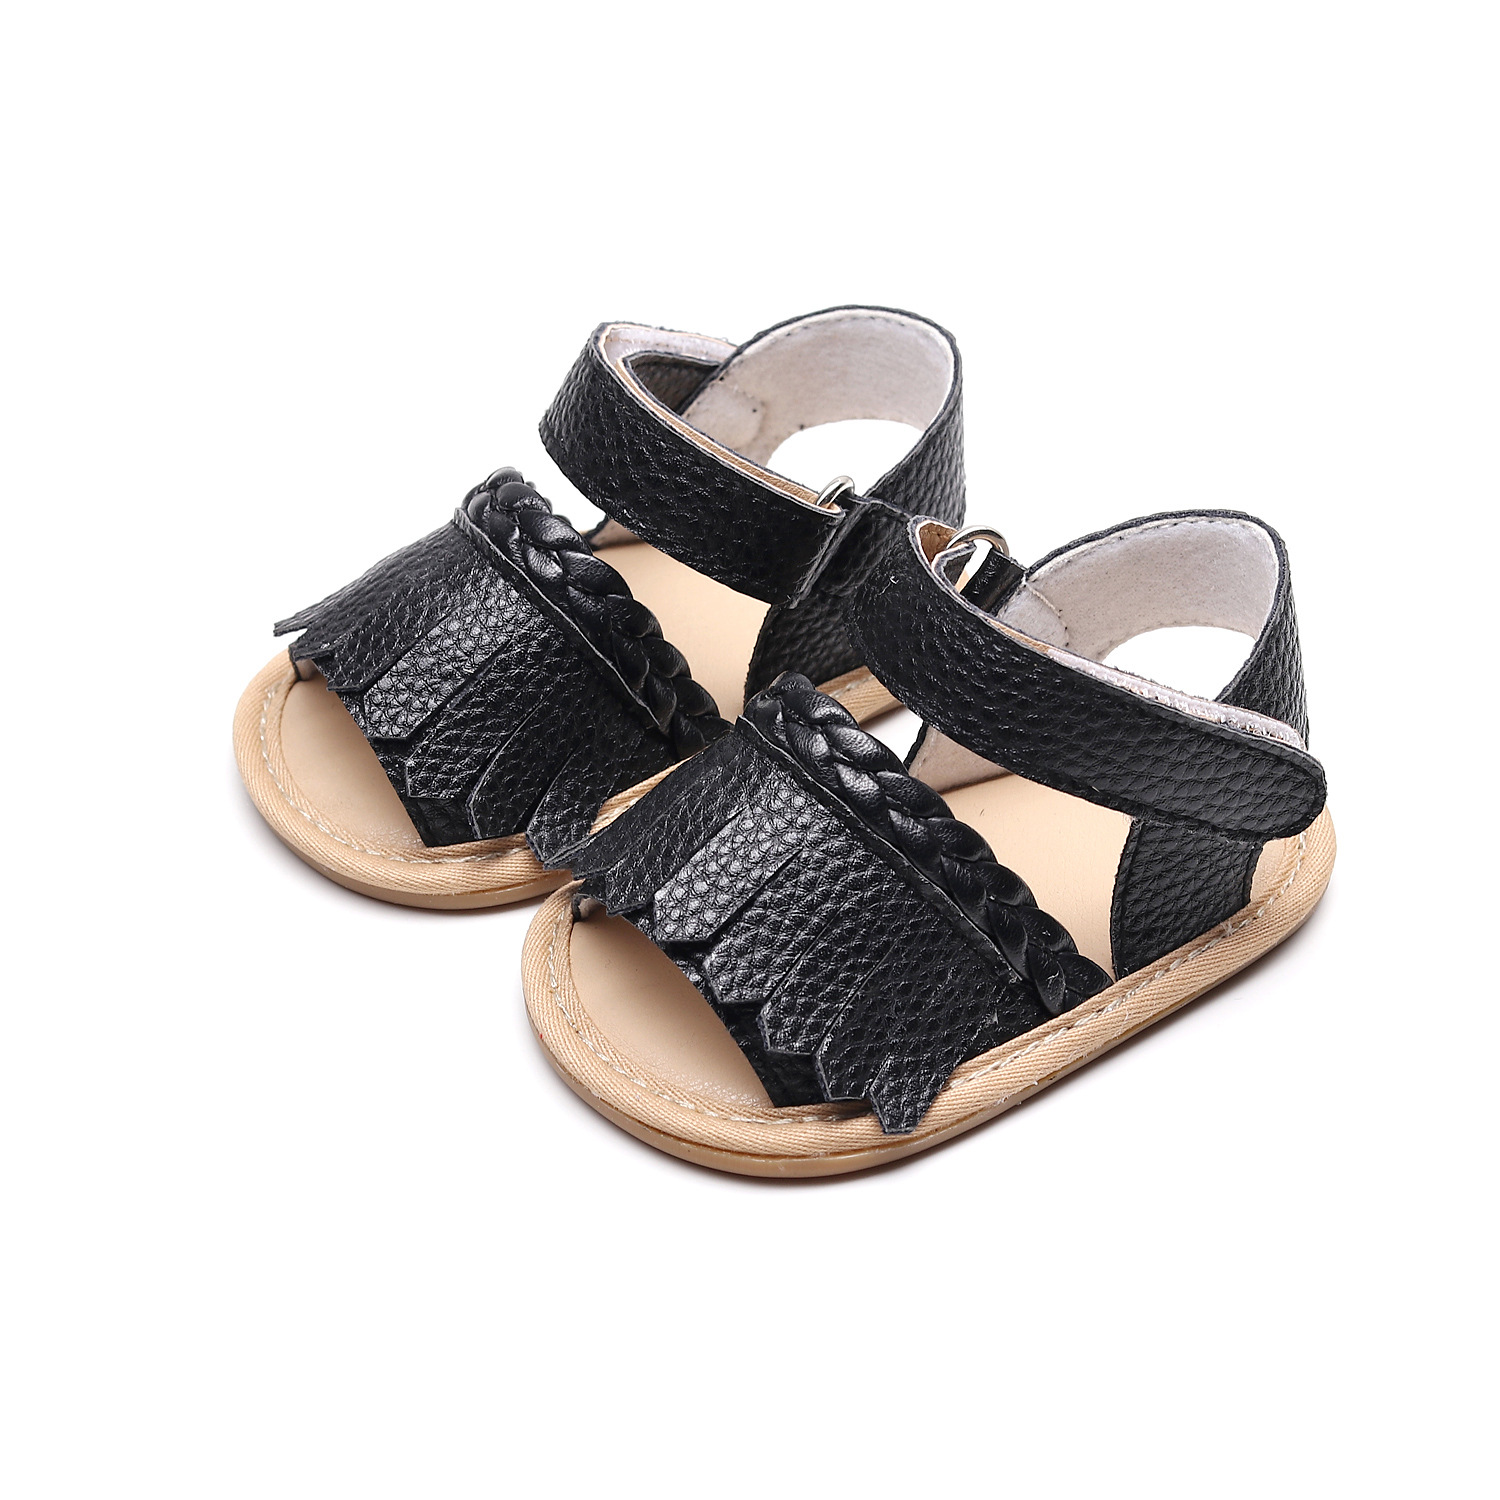 Tassel Sandals Baby Toddler Shoes